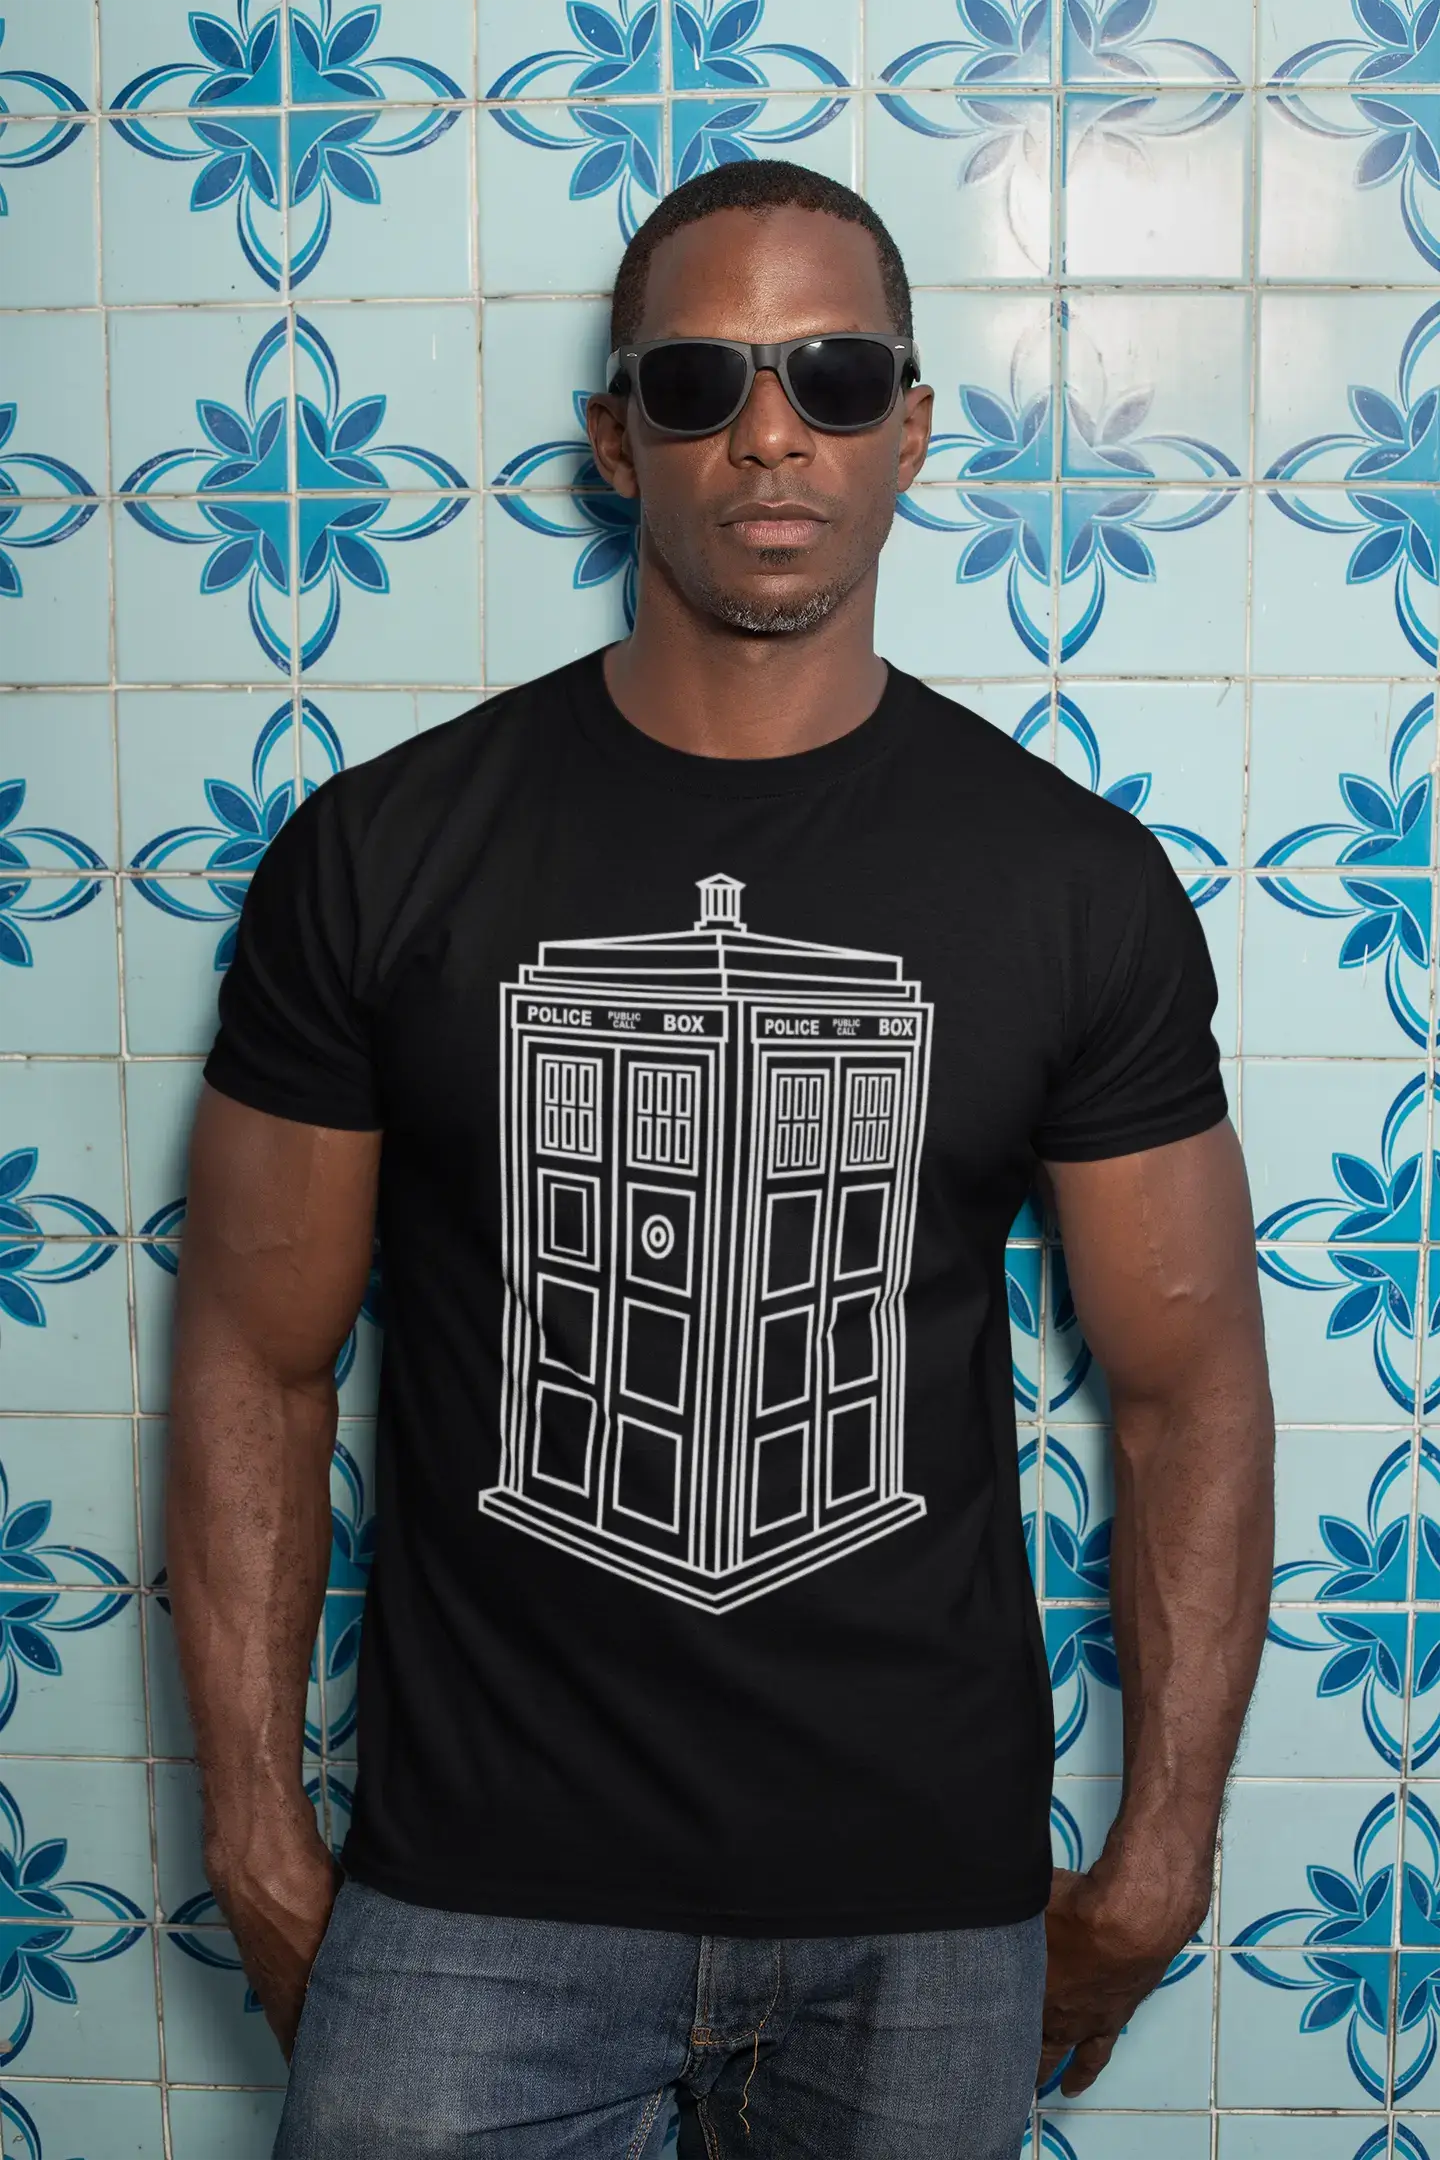 ULTRABASIC Men's Graphic T-Shirt Black Police Box - The Doctor Time Machine Shirt